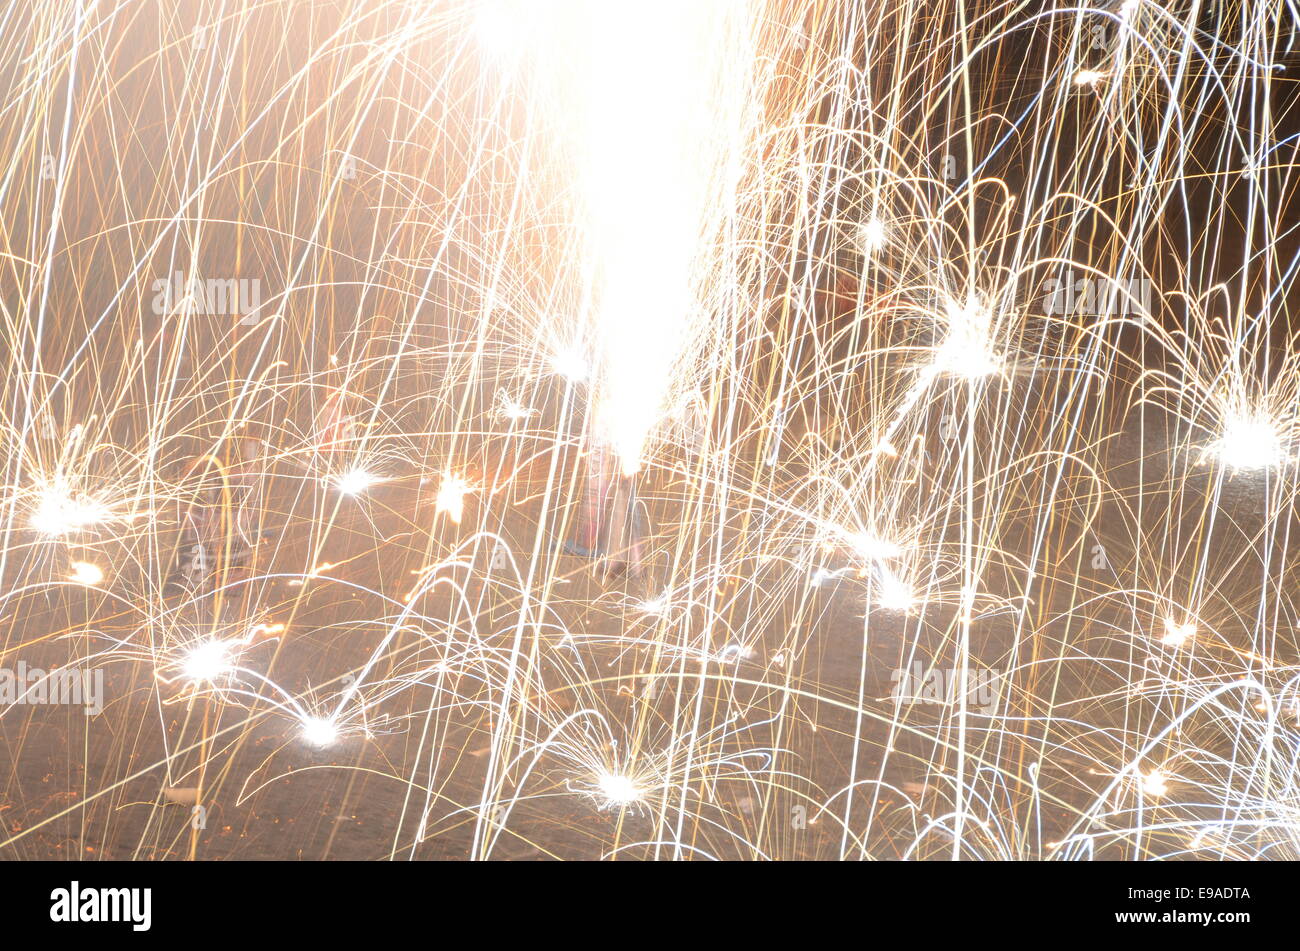 fireworks Stock Photo